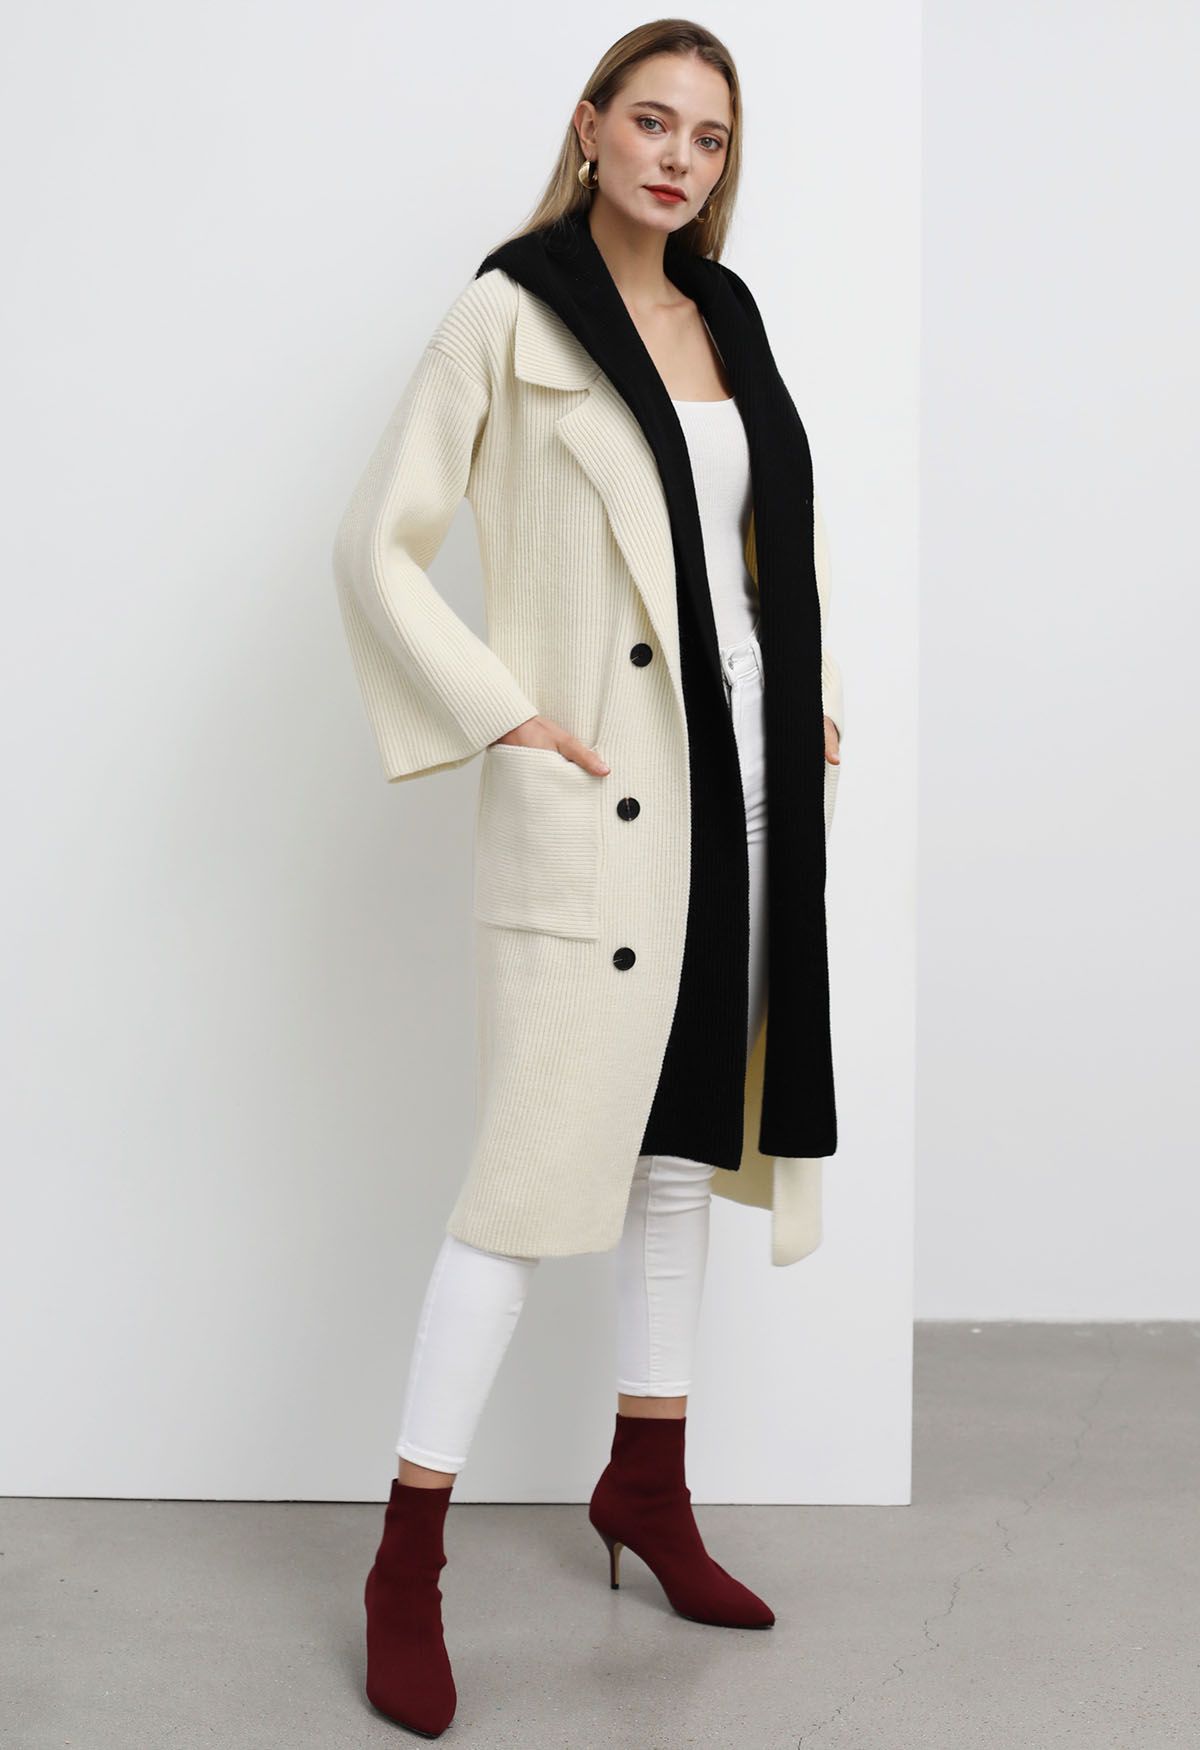 Kontrastfarbener, zweiteiliger, langer Mantel mit Kapuze in Creme